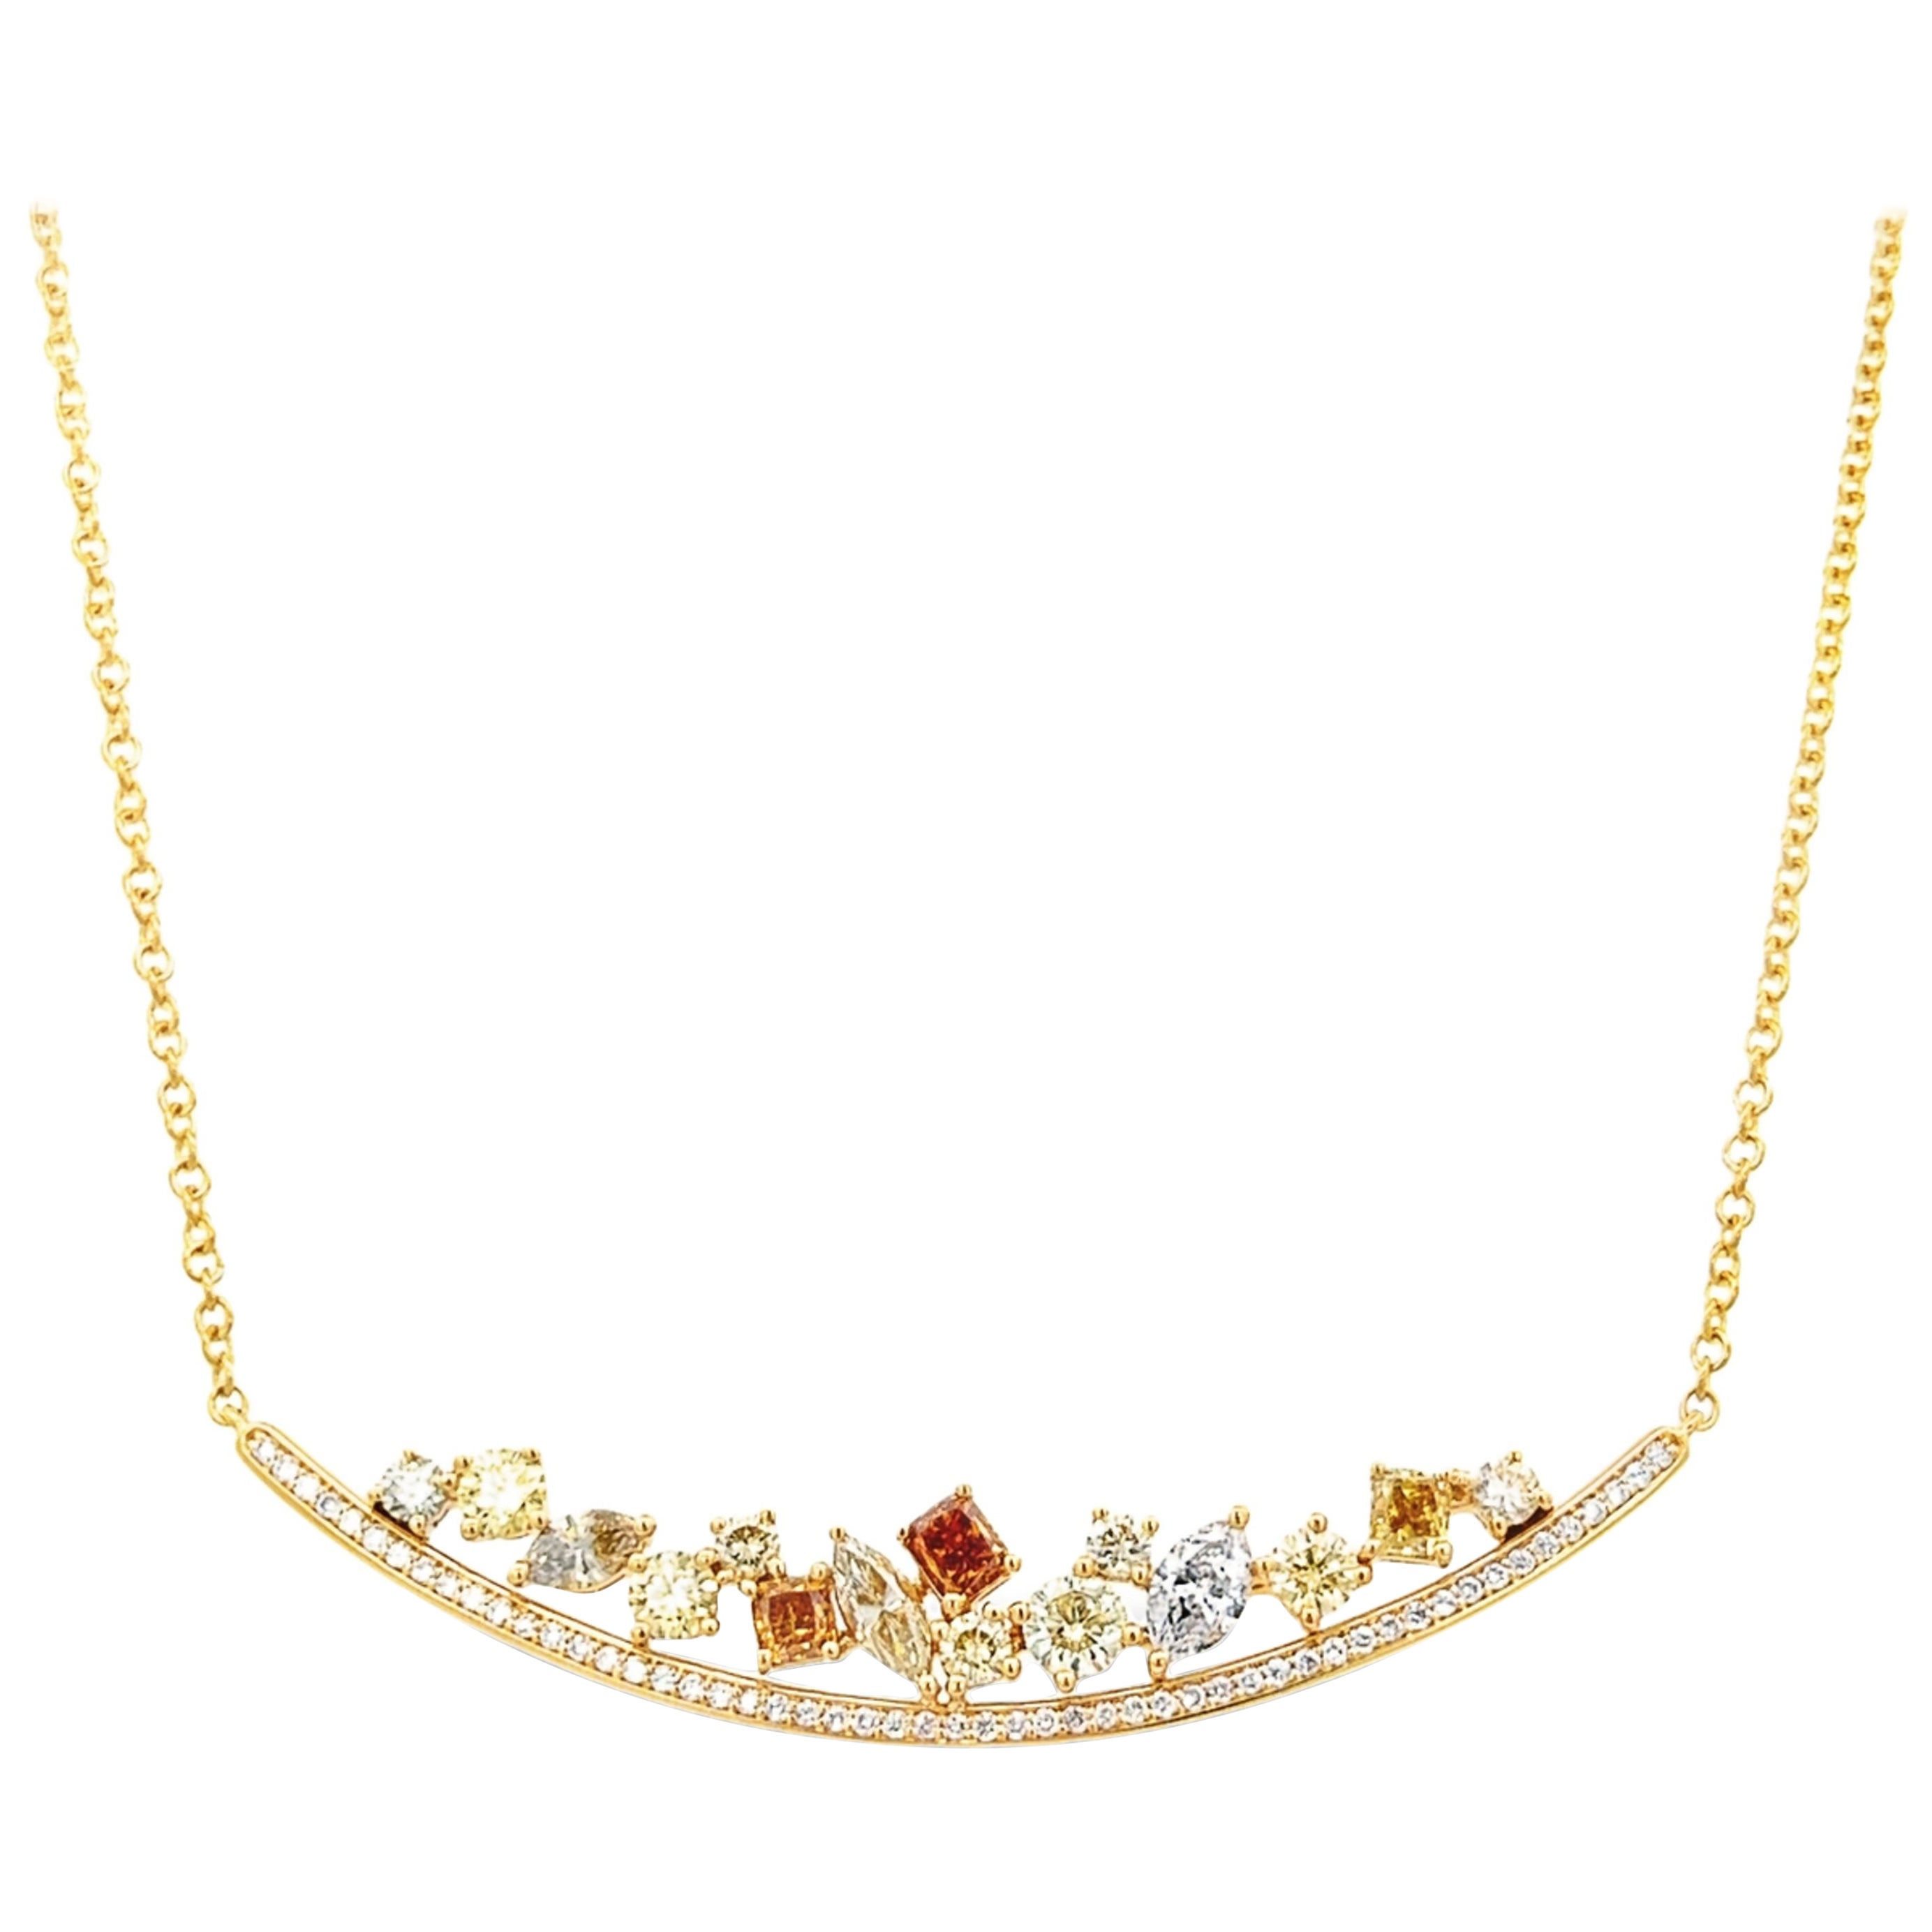 Alexander Beverly Hills Collier pendentif en or 18 carats avec diamants multicolores de 3,04 carats